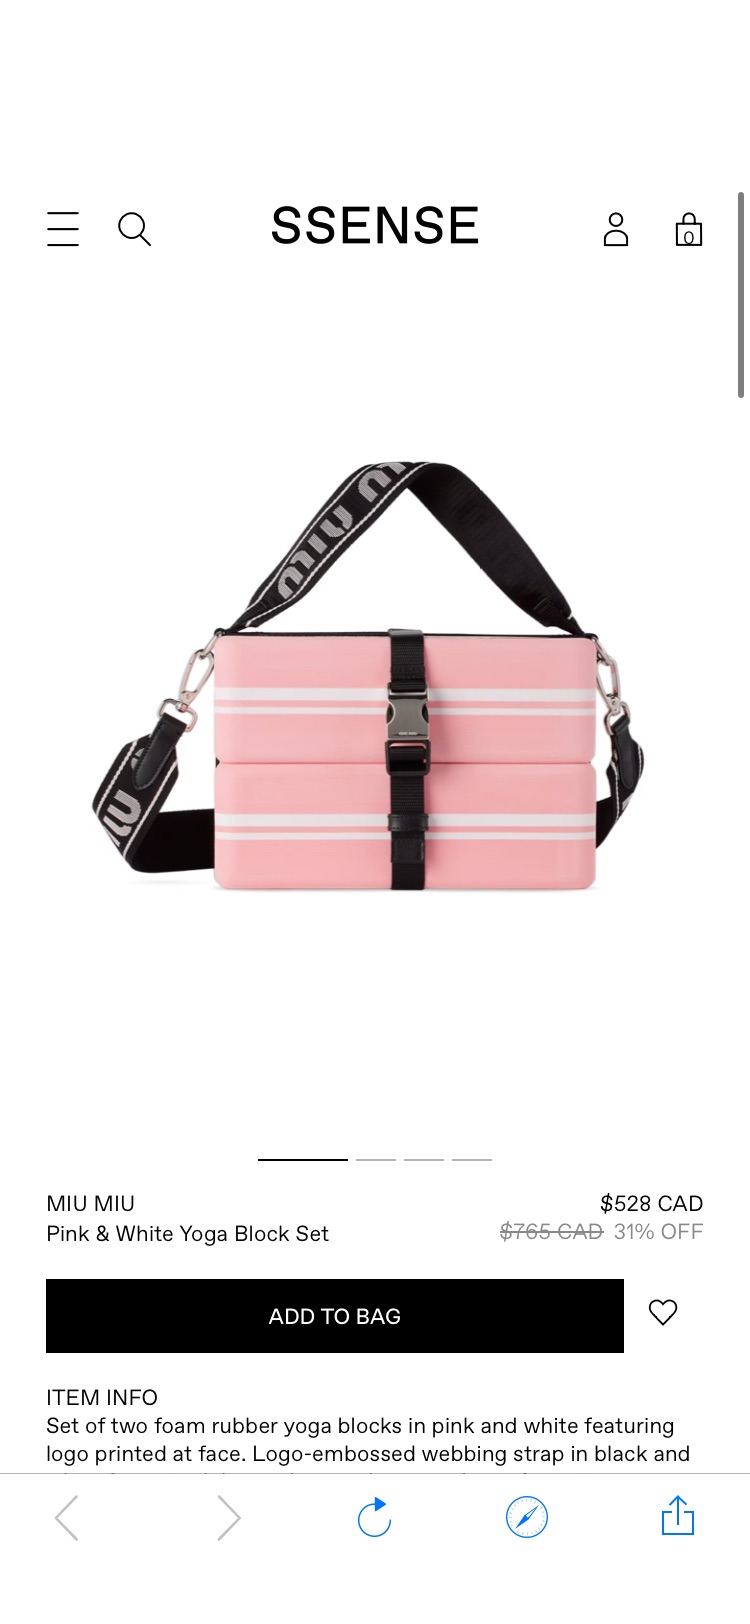 Pink & White Yoga Block Set by Miu Miu on Sale